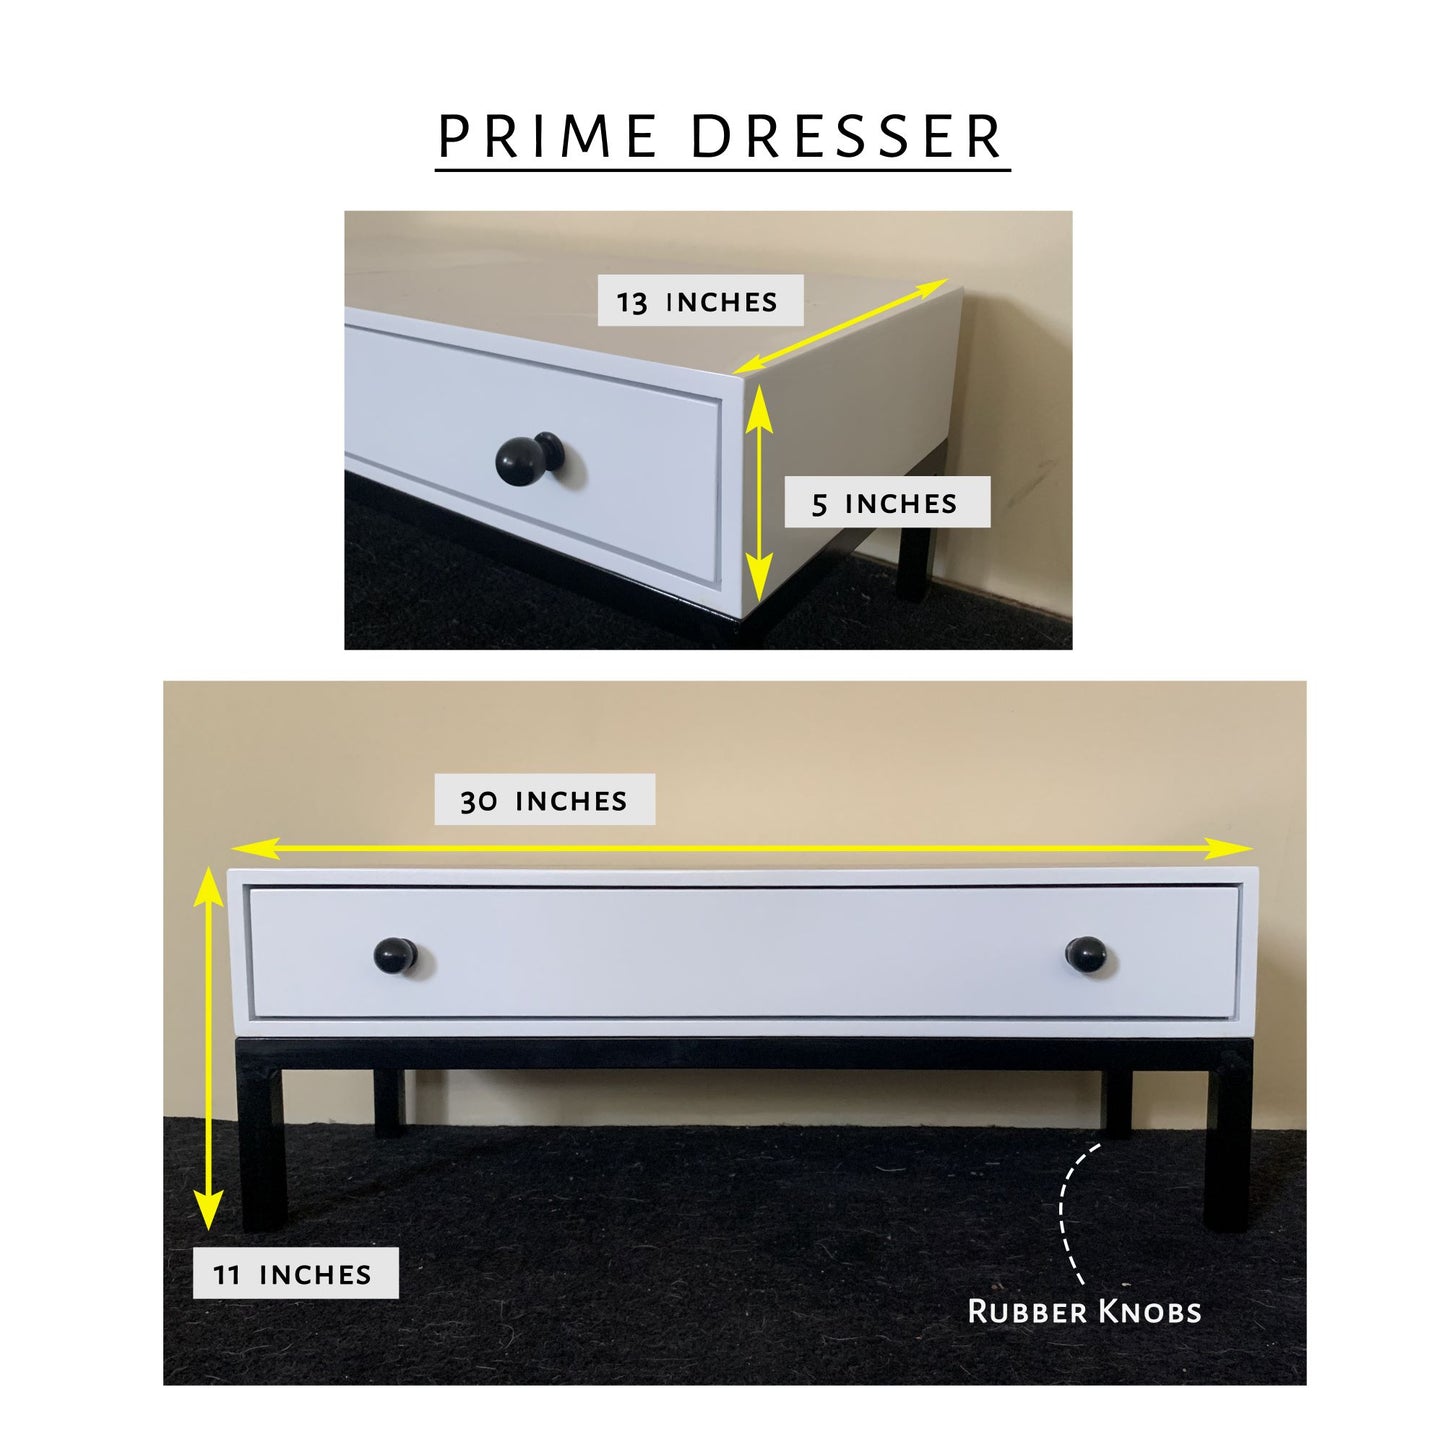 Prime Dresser